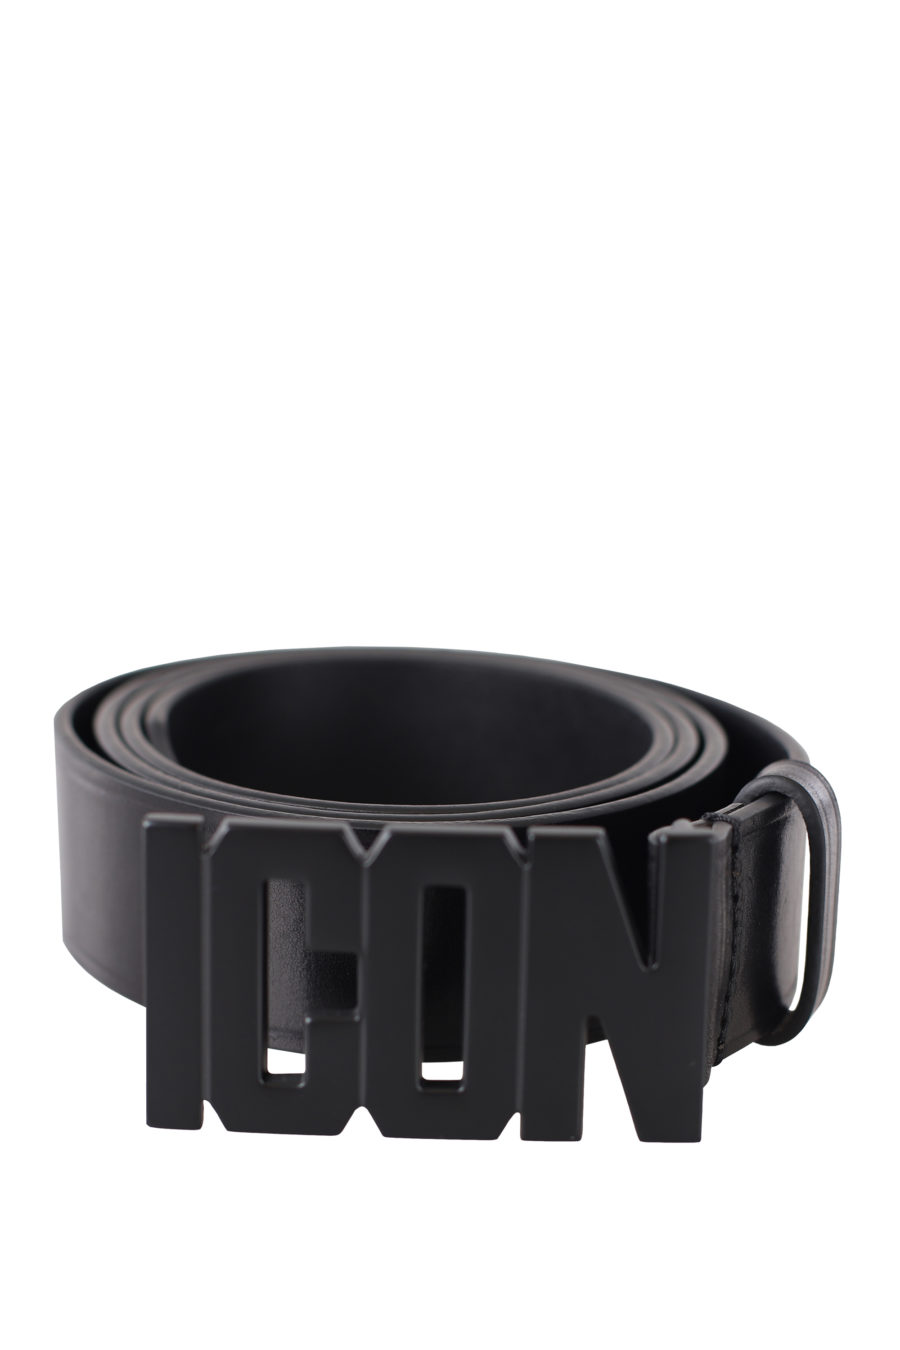 Cinturón negro con logo "icon" negro - IMG 9420